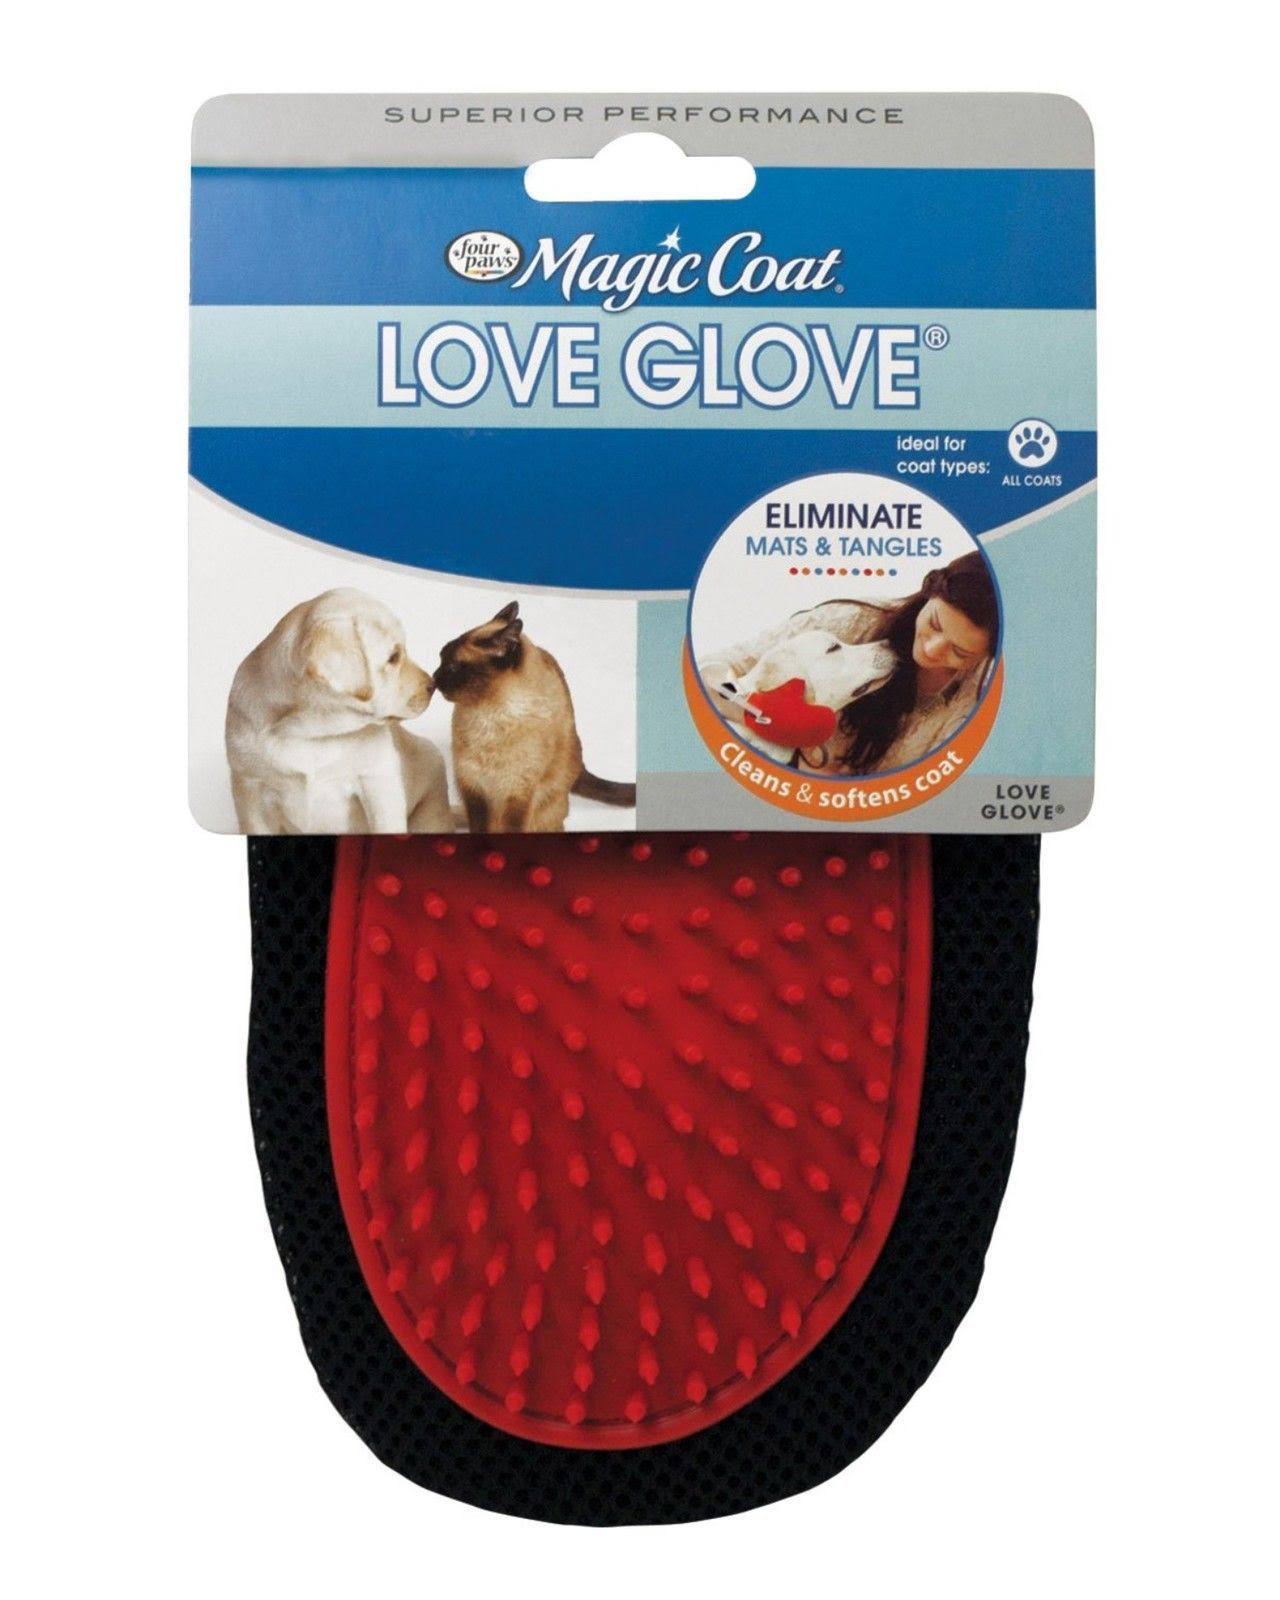 Four Paws Magic Coat Love Glove Grooming Mitt